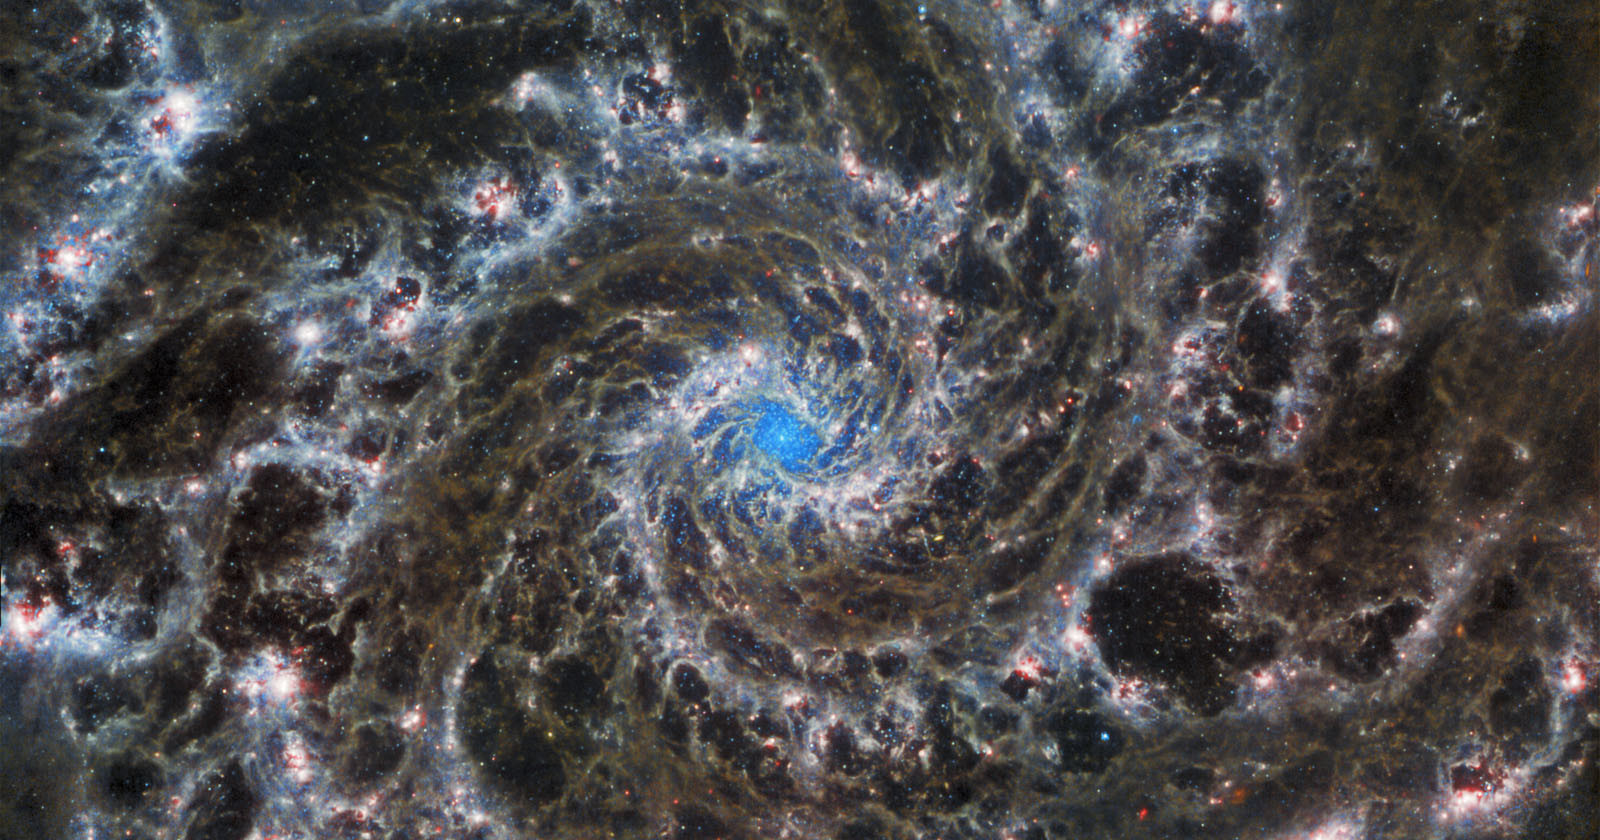 James Webbs Captures Mesmerizing Photo of the Phantom Galaxy